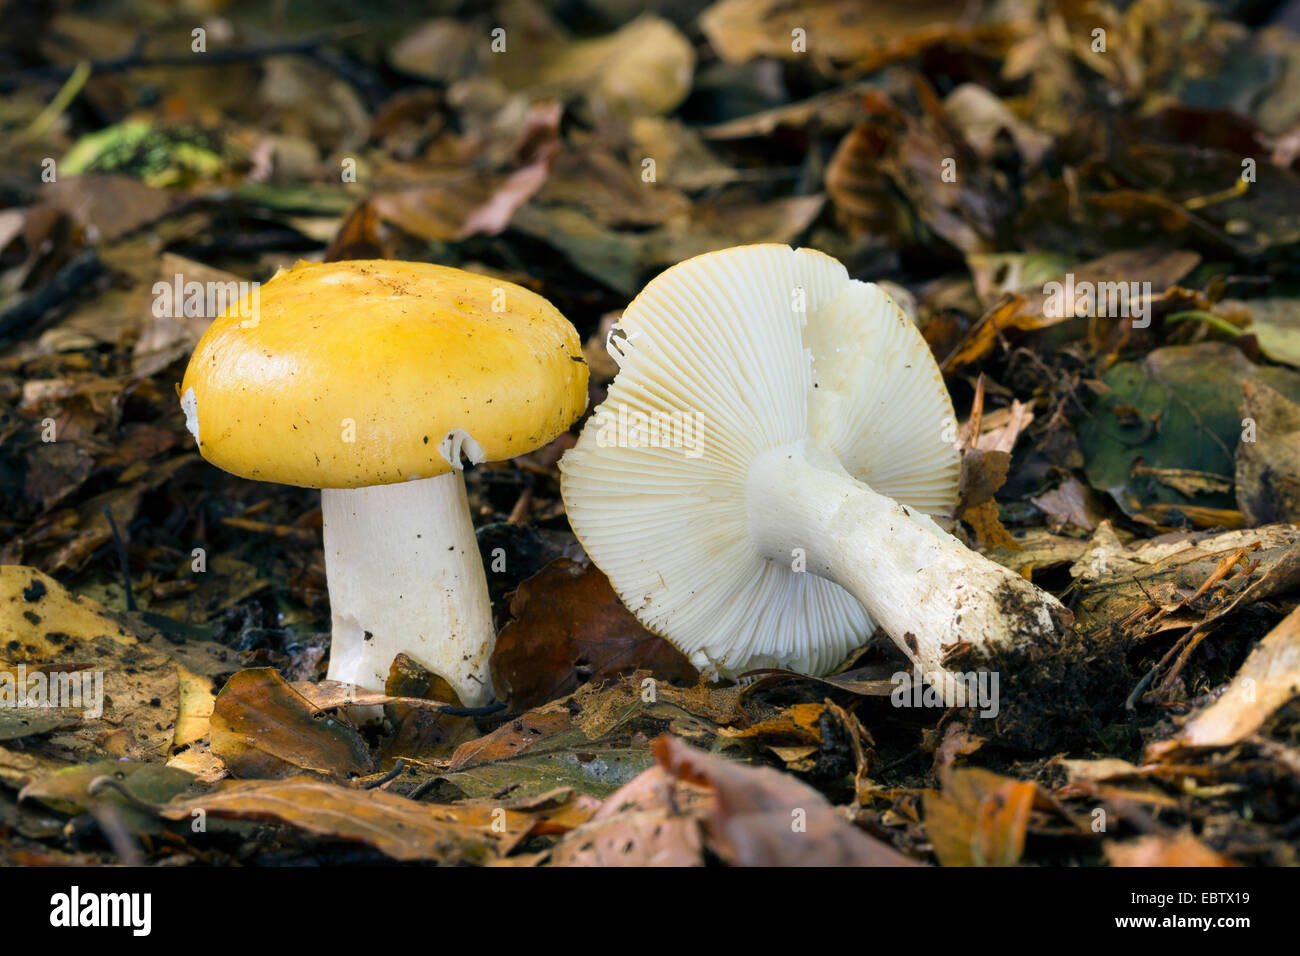 Gemeinsamen ubling gelb, Ocker-Brittlegill (ubling Ochroleuca, ubling Granulosa), zwei Fruchtkörper auf Waldboden, Deutschland Stockfoto